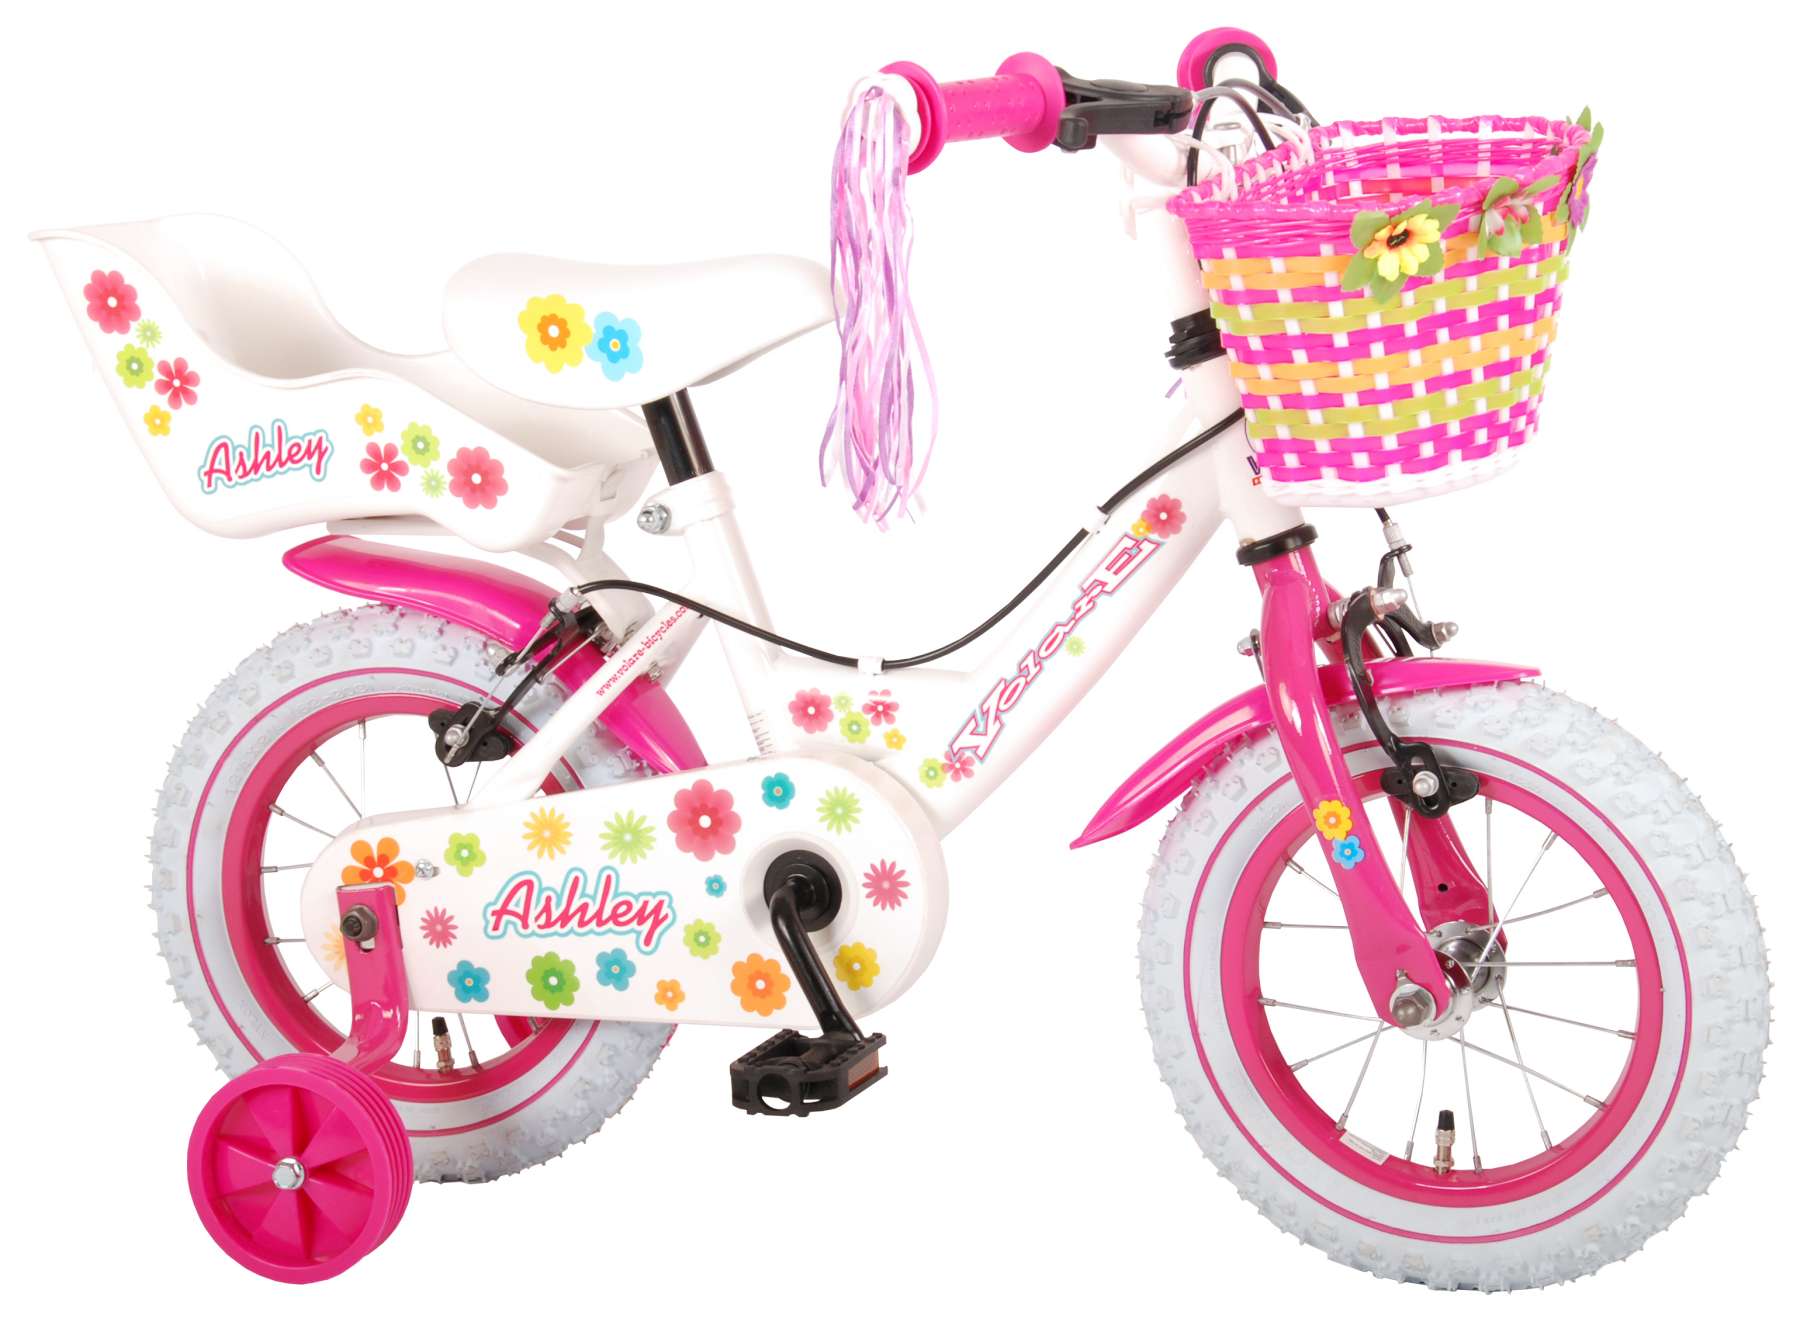 12 inch girls bike